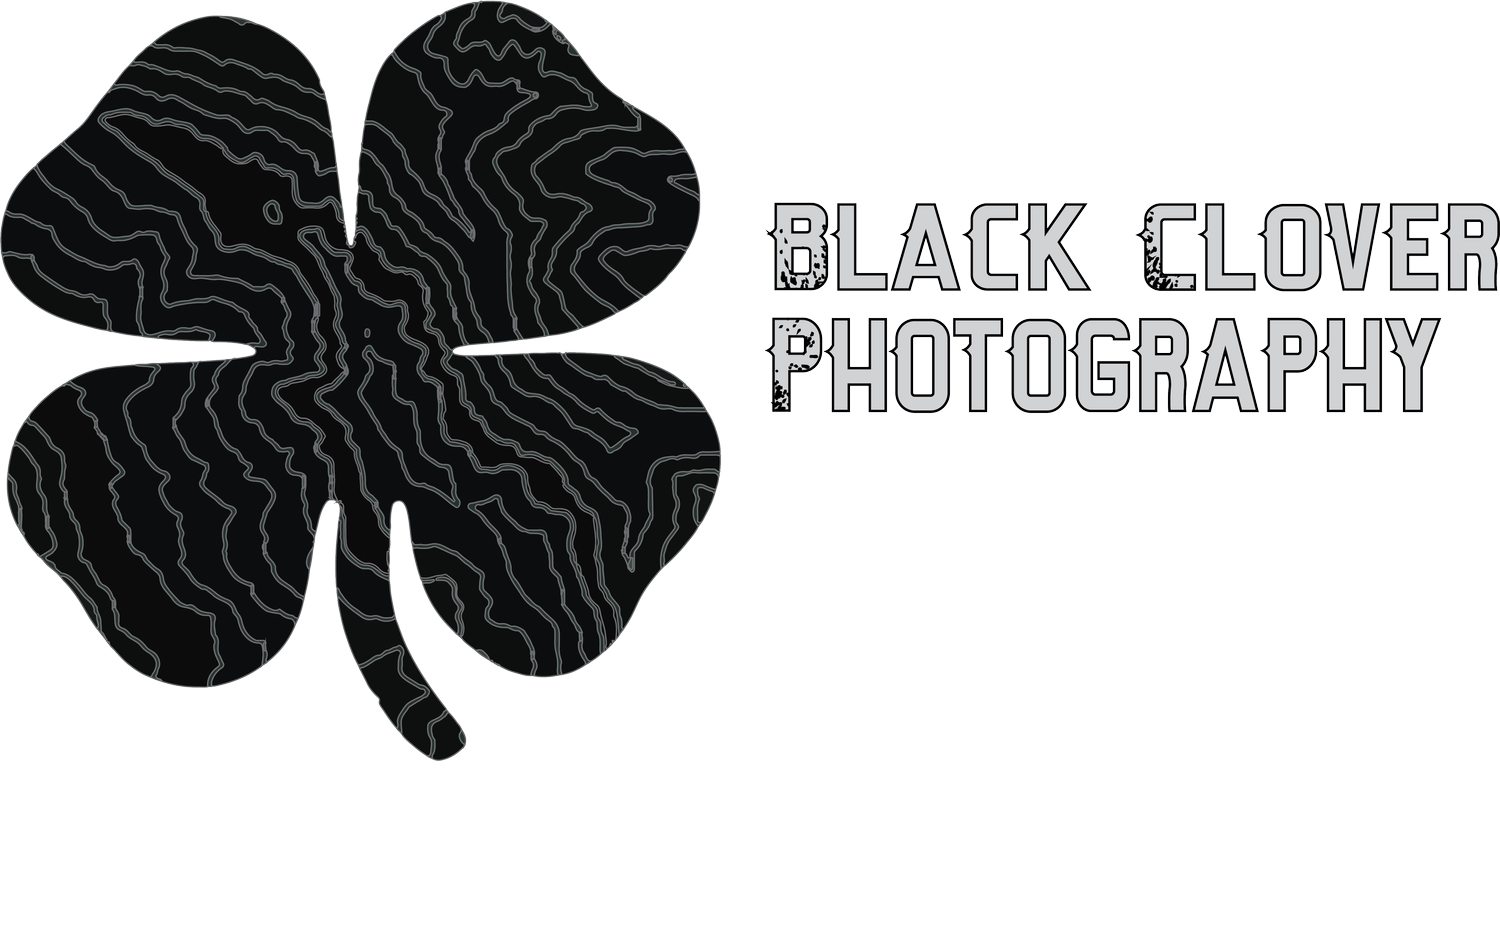 Black Clover Photography